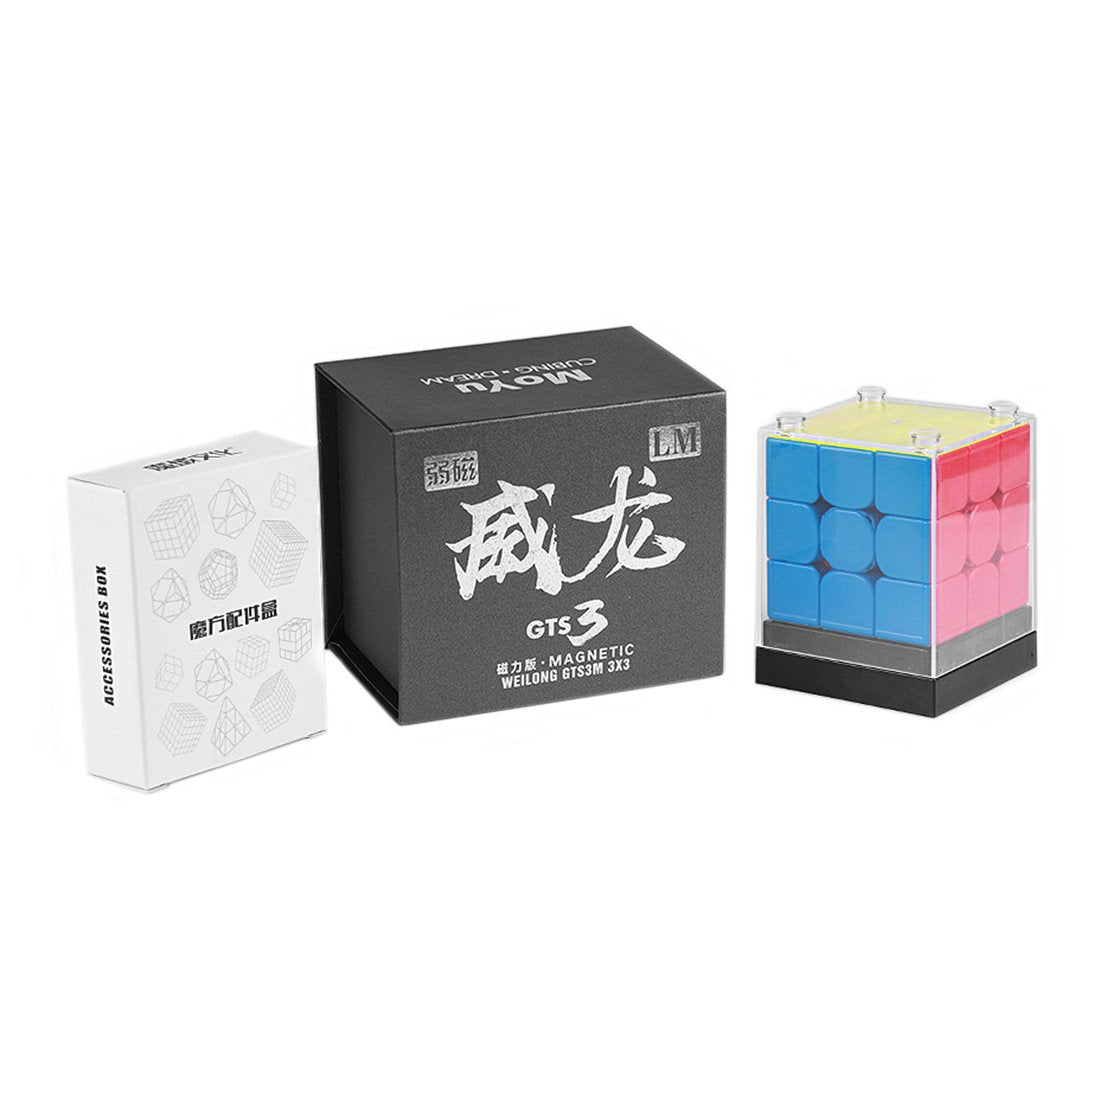 Yj8261 Moyu Weilong Gts3 Lm 3X3 Magic Cube Stickerless - Magnetic Version